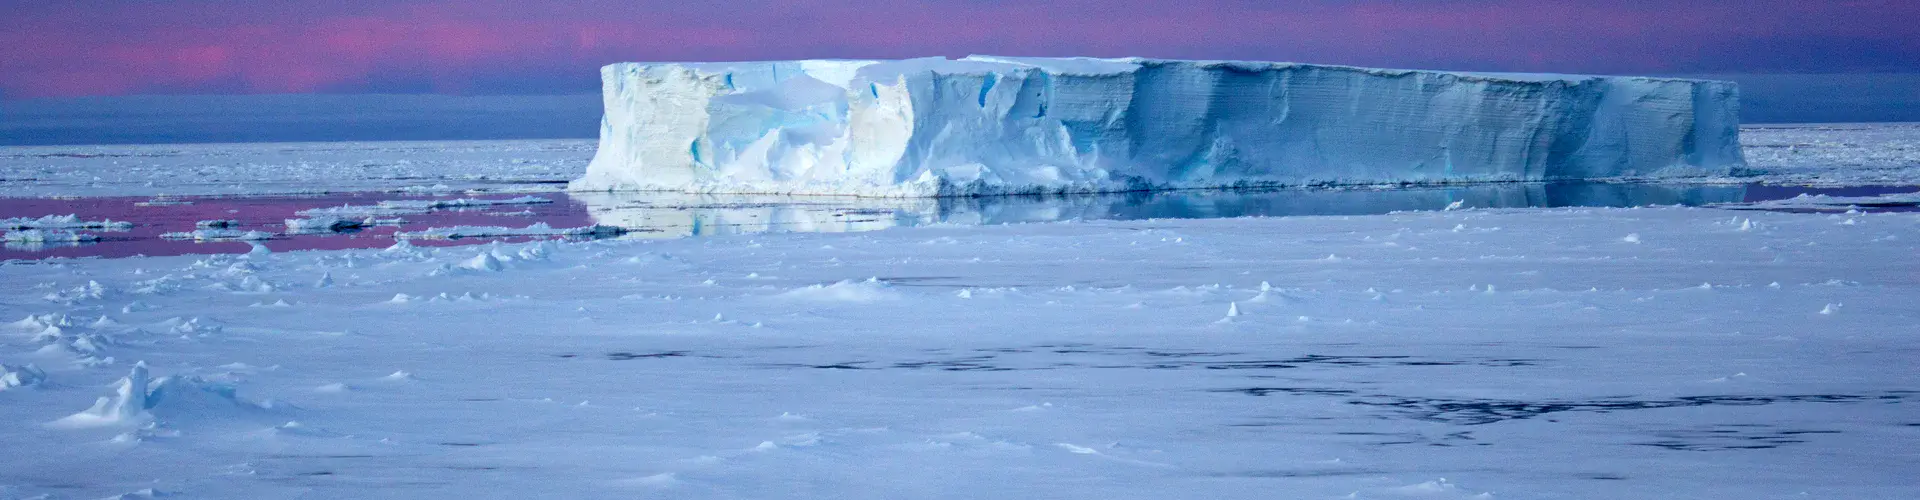 Iceberg surrounded by sea ice in the Antarctic (Credit: Eva Nowatzki, distributed via imaggeo.egu.eu)